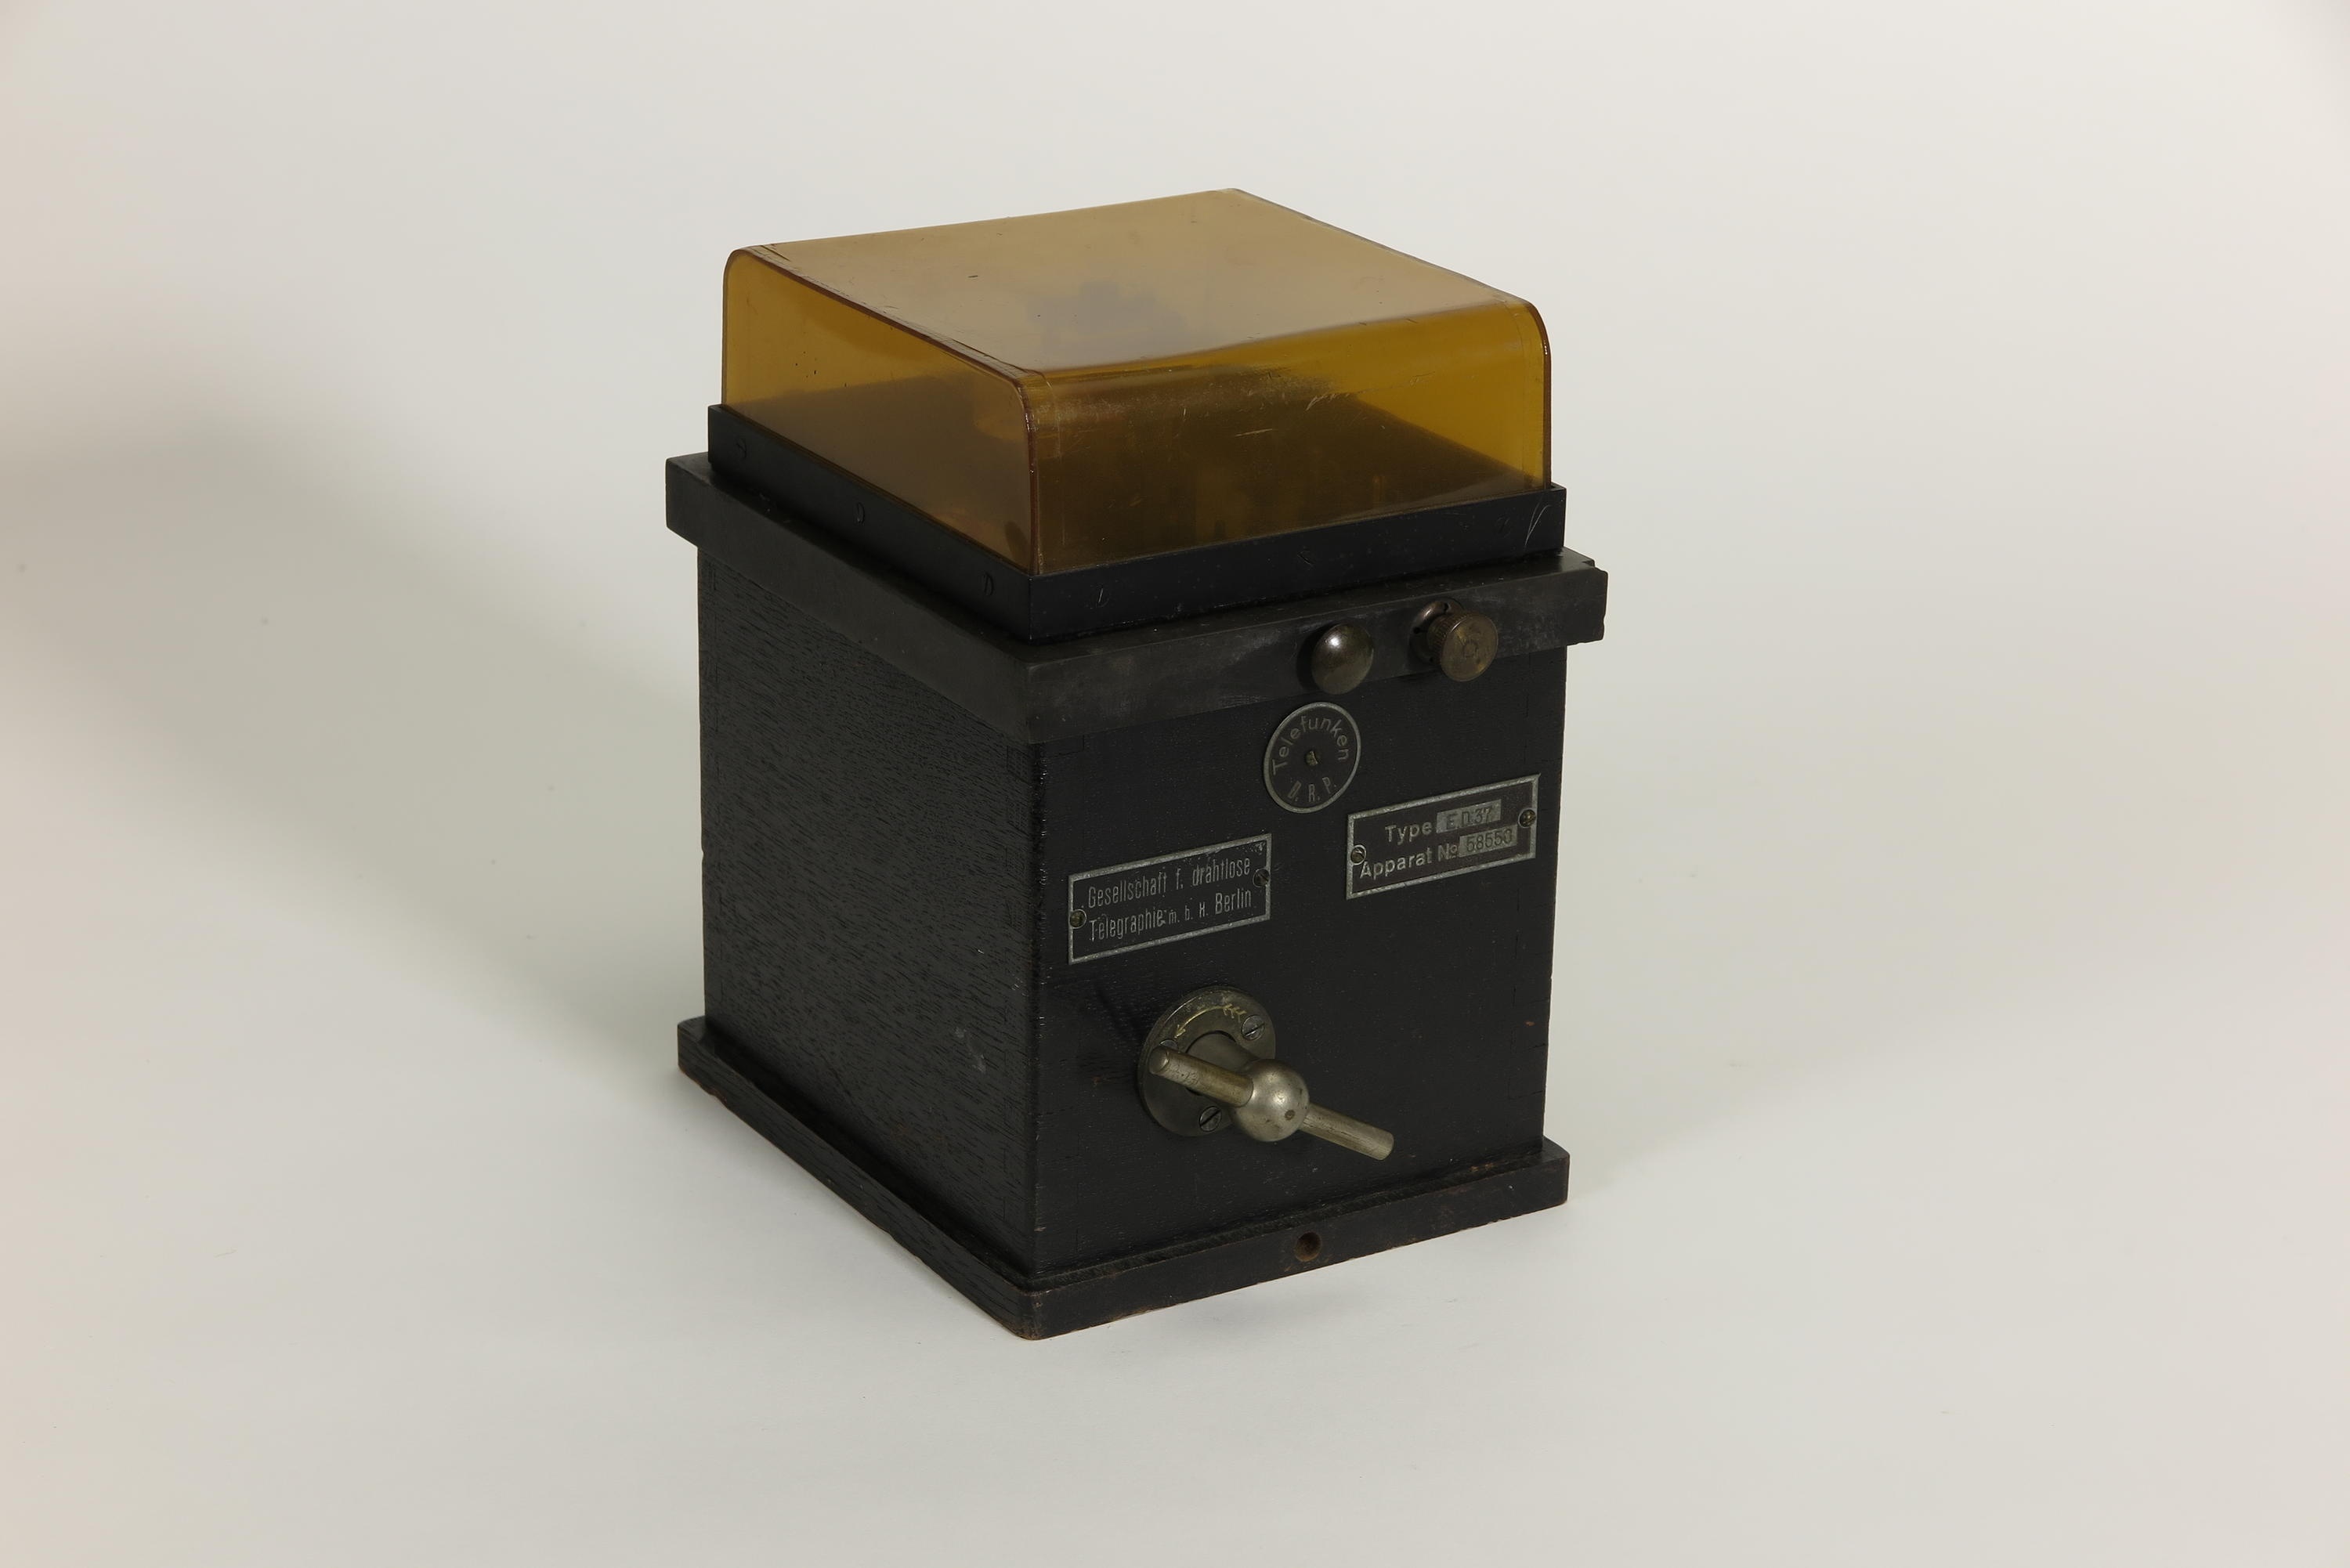 Tikker-Detektor Telefunken ED37 (Deutsches Technikmuseum CC BY)